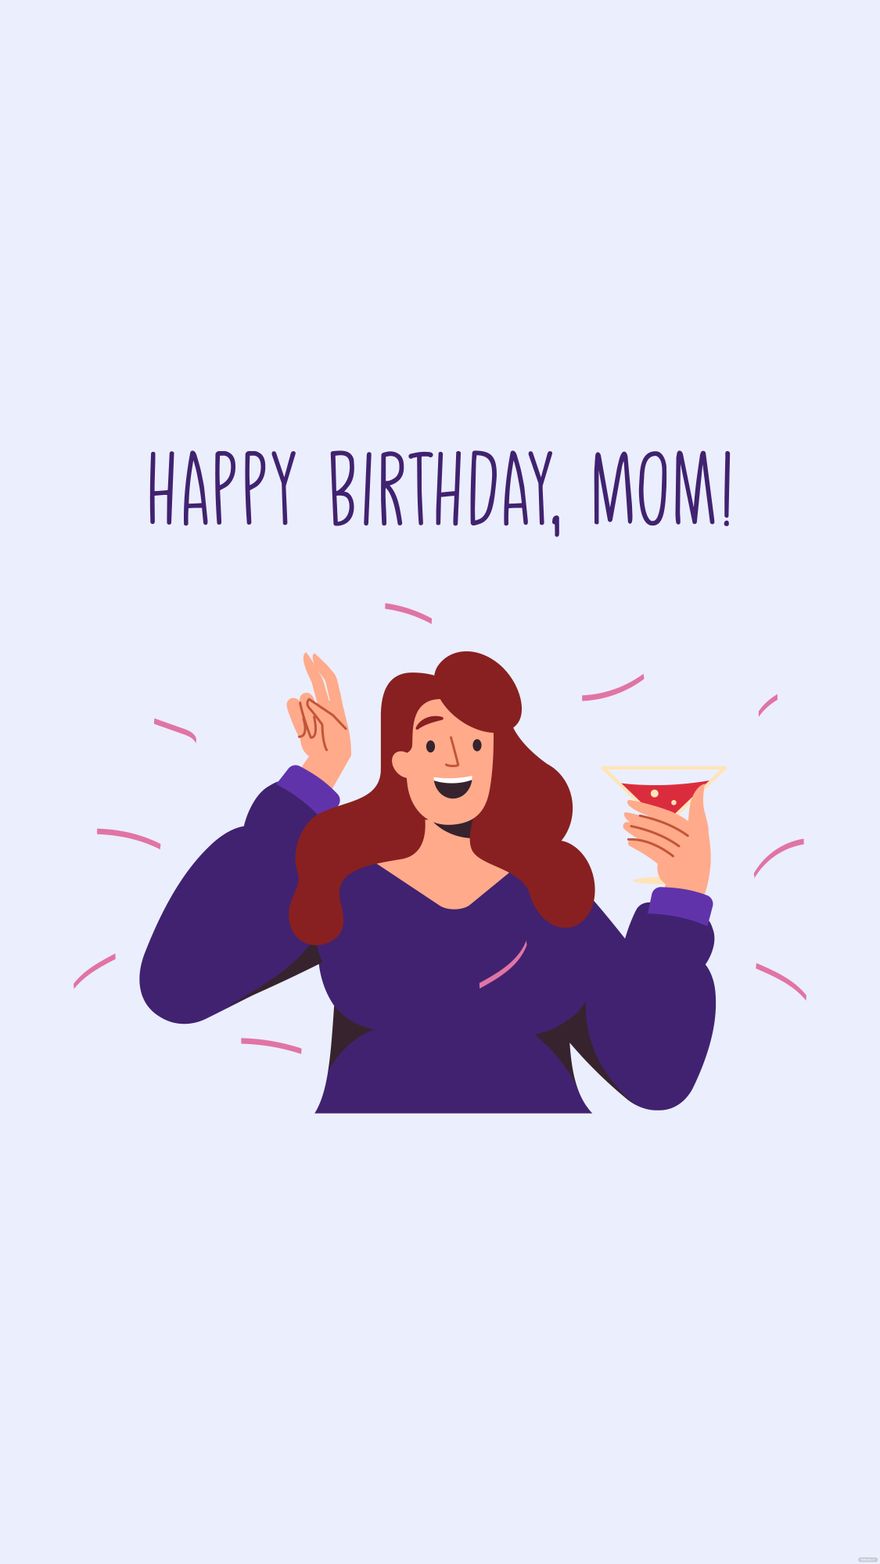 cool happy birthday mom images